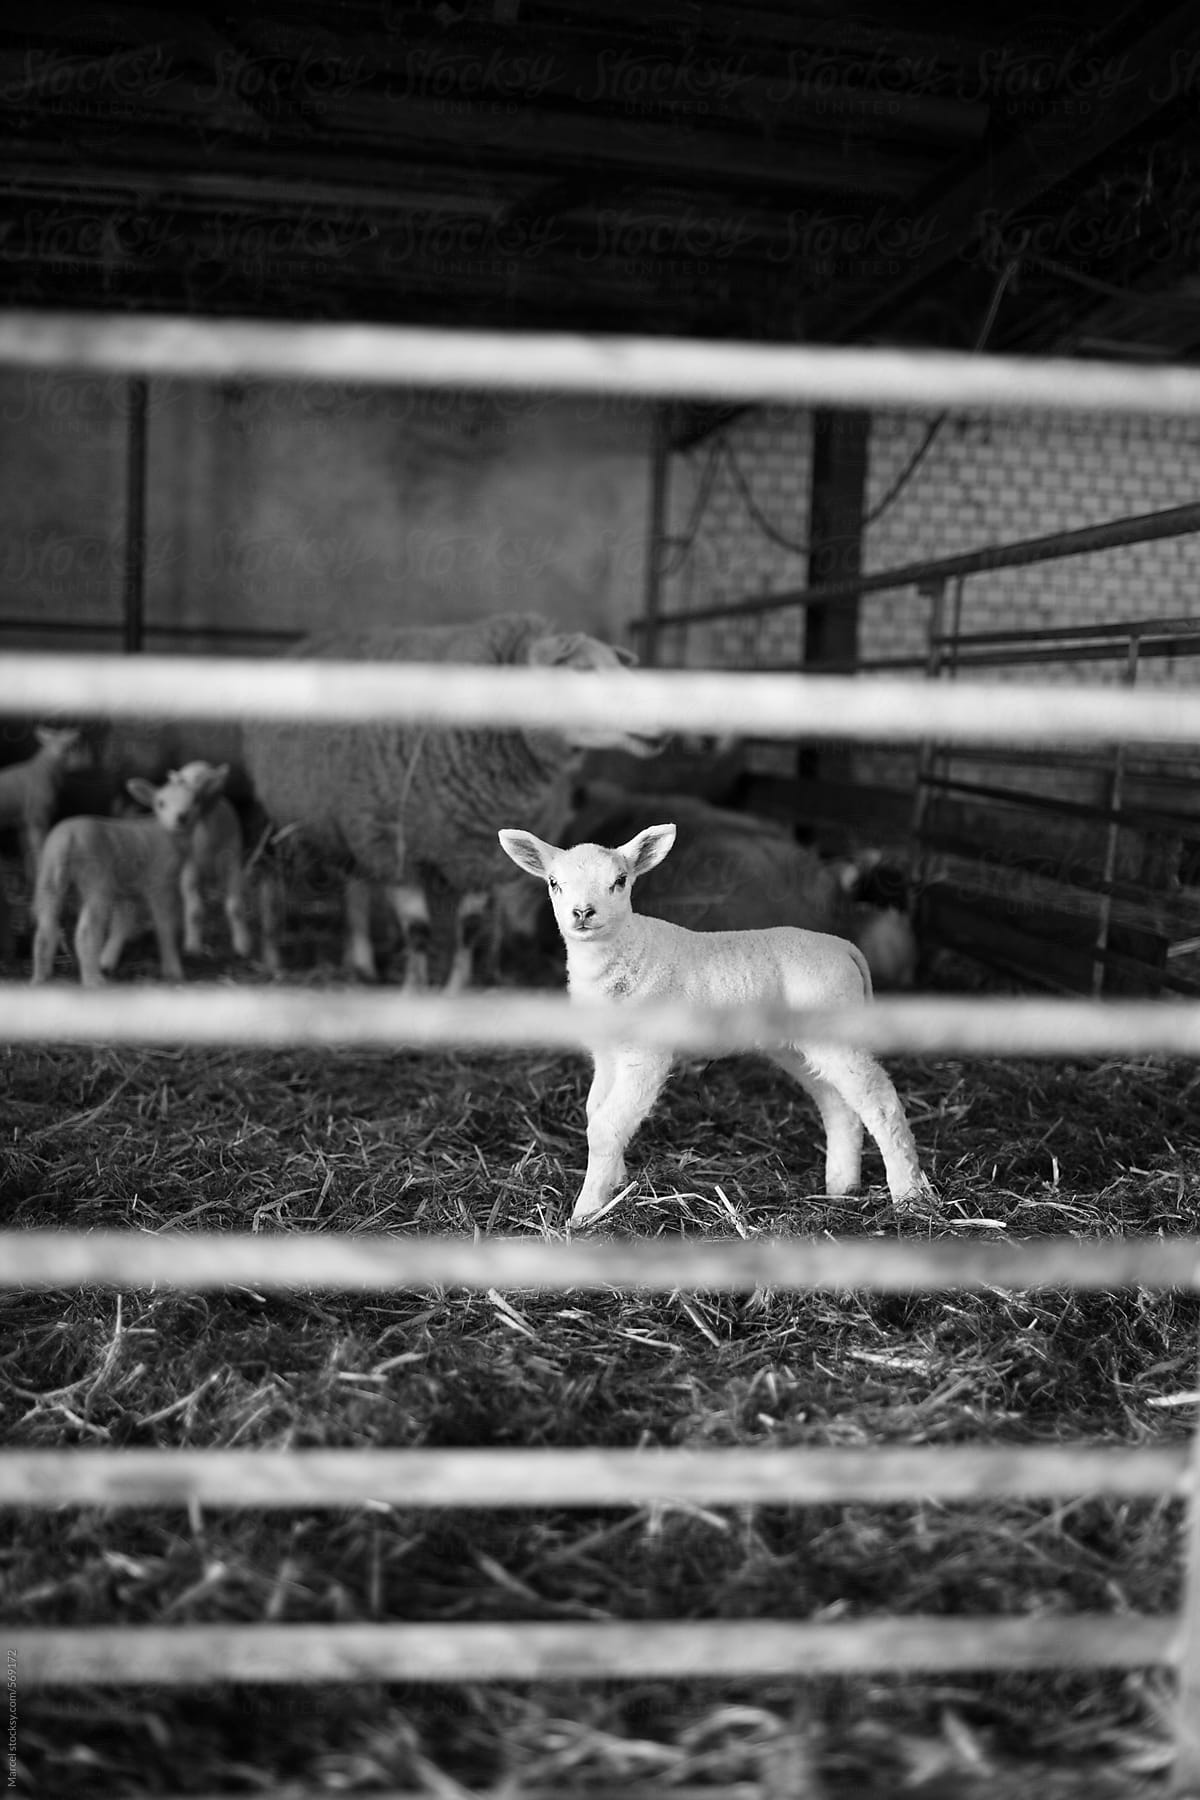 Newborn lambs, a few days old, in a dark stable